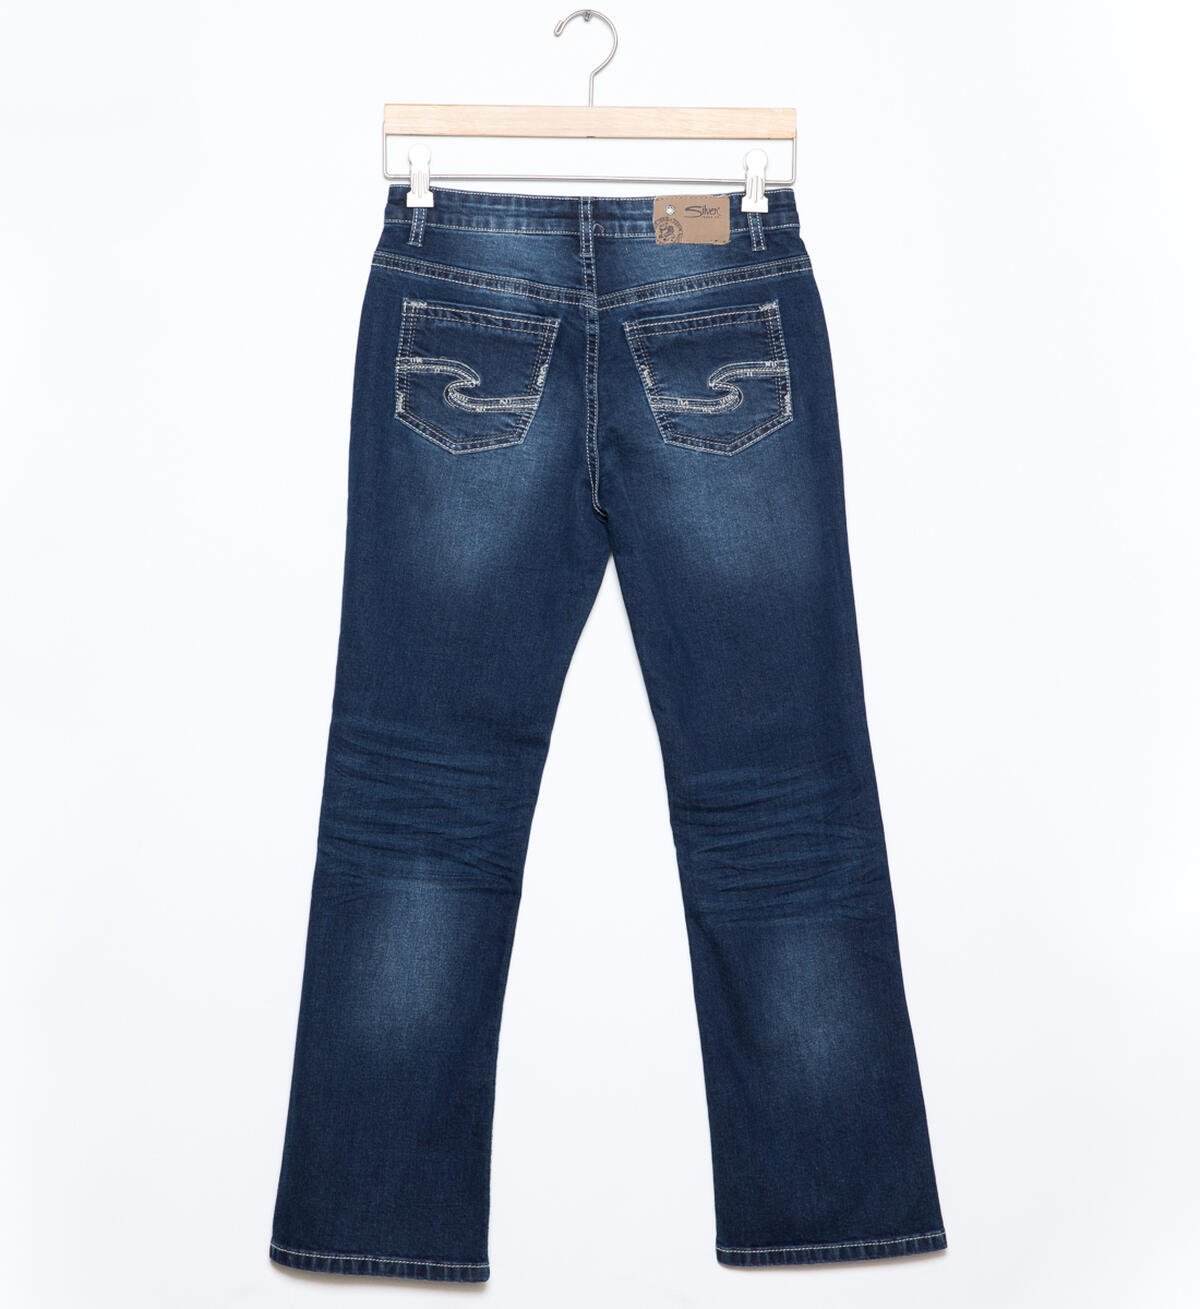 Zane Bootcut Jeans in Dark Wash (4-7), , hi-res image number 1